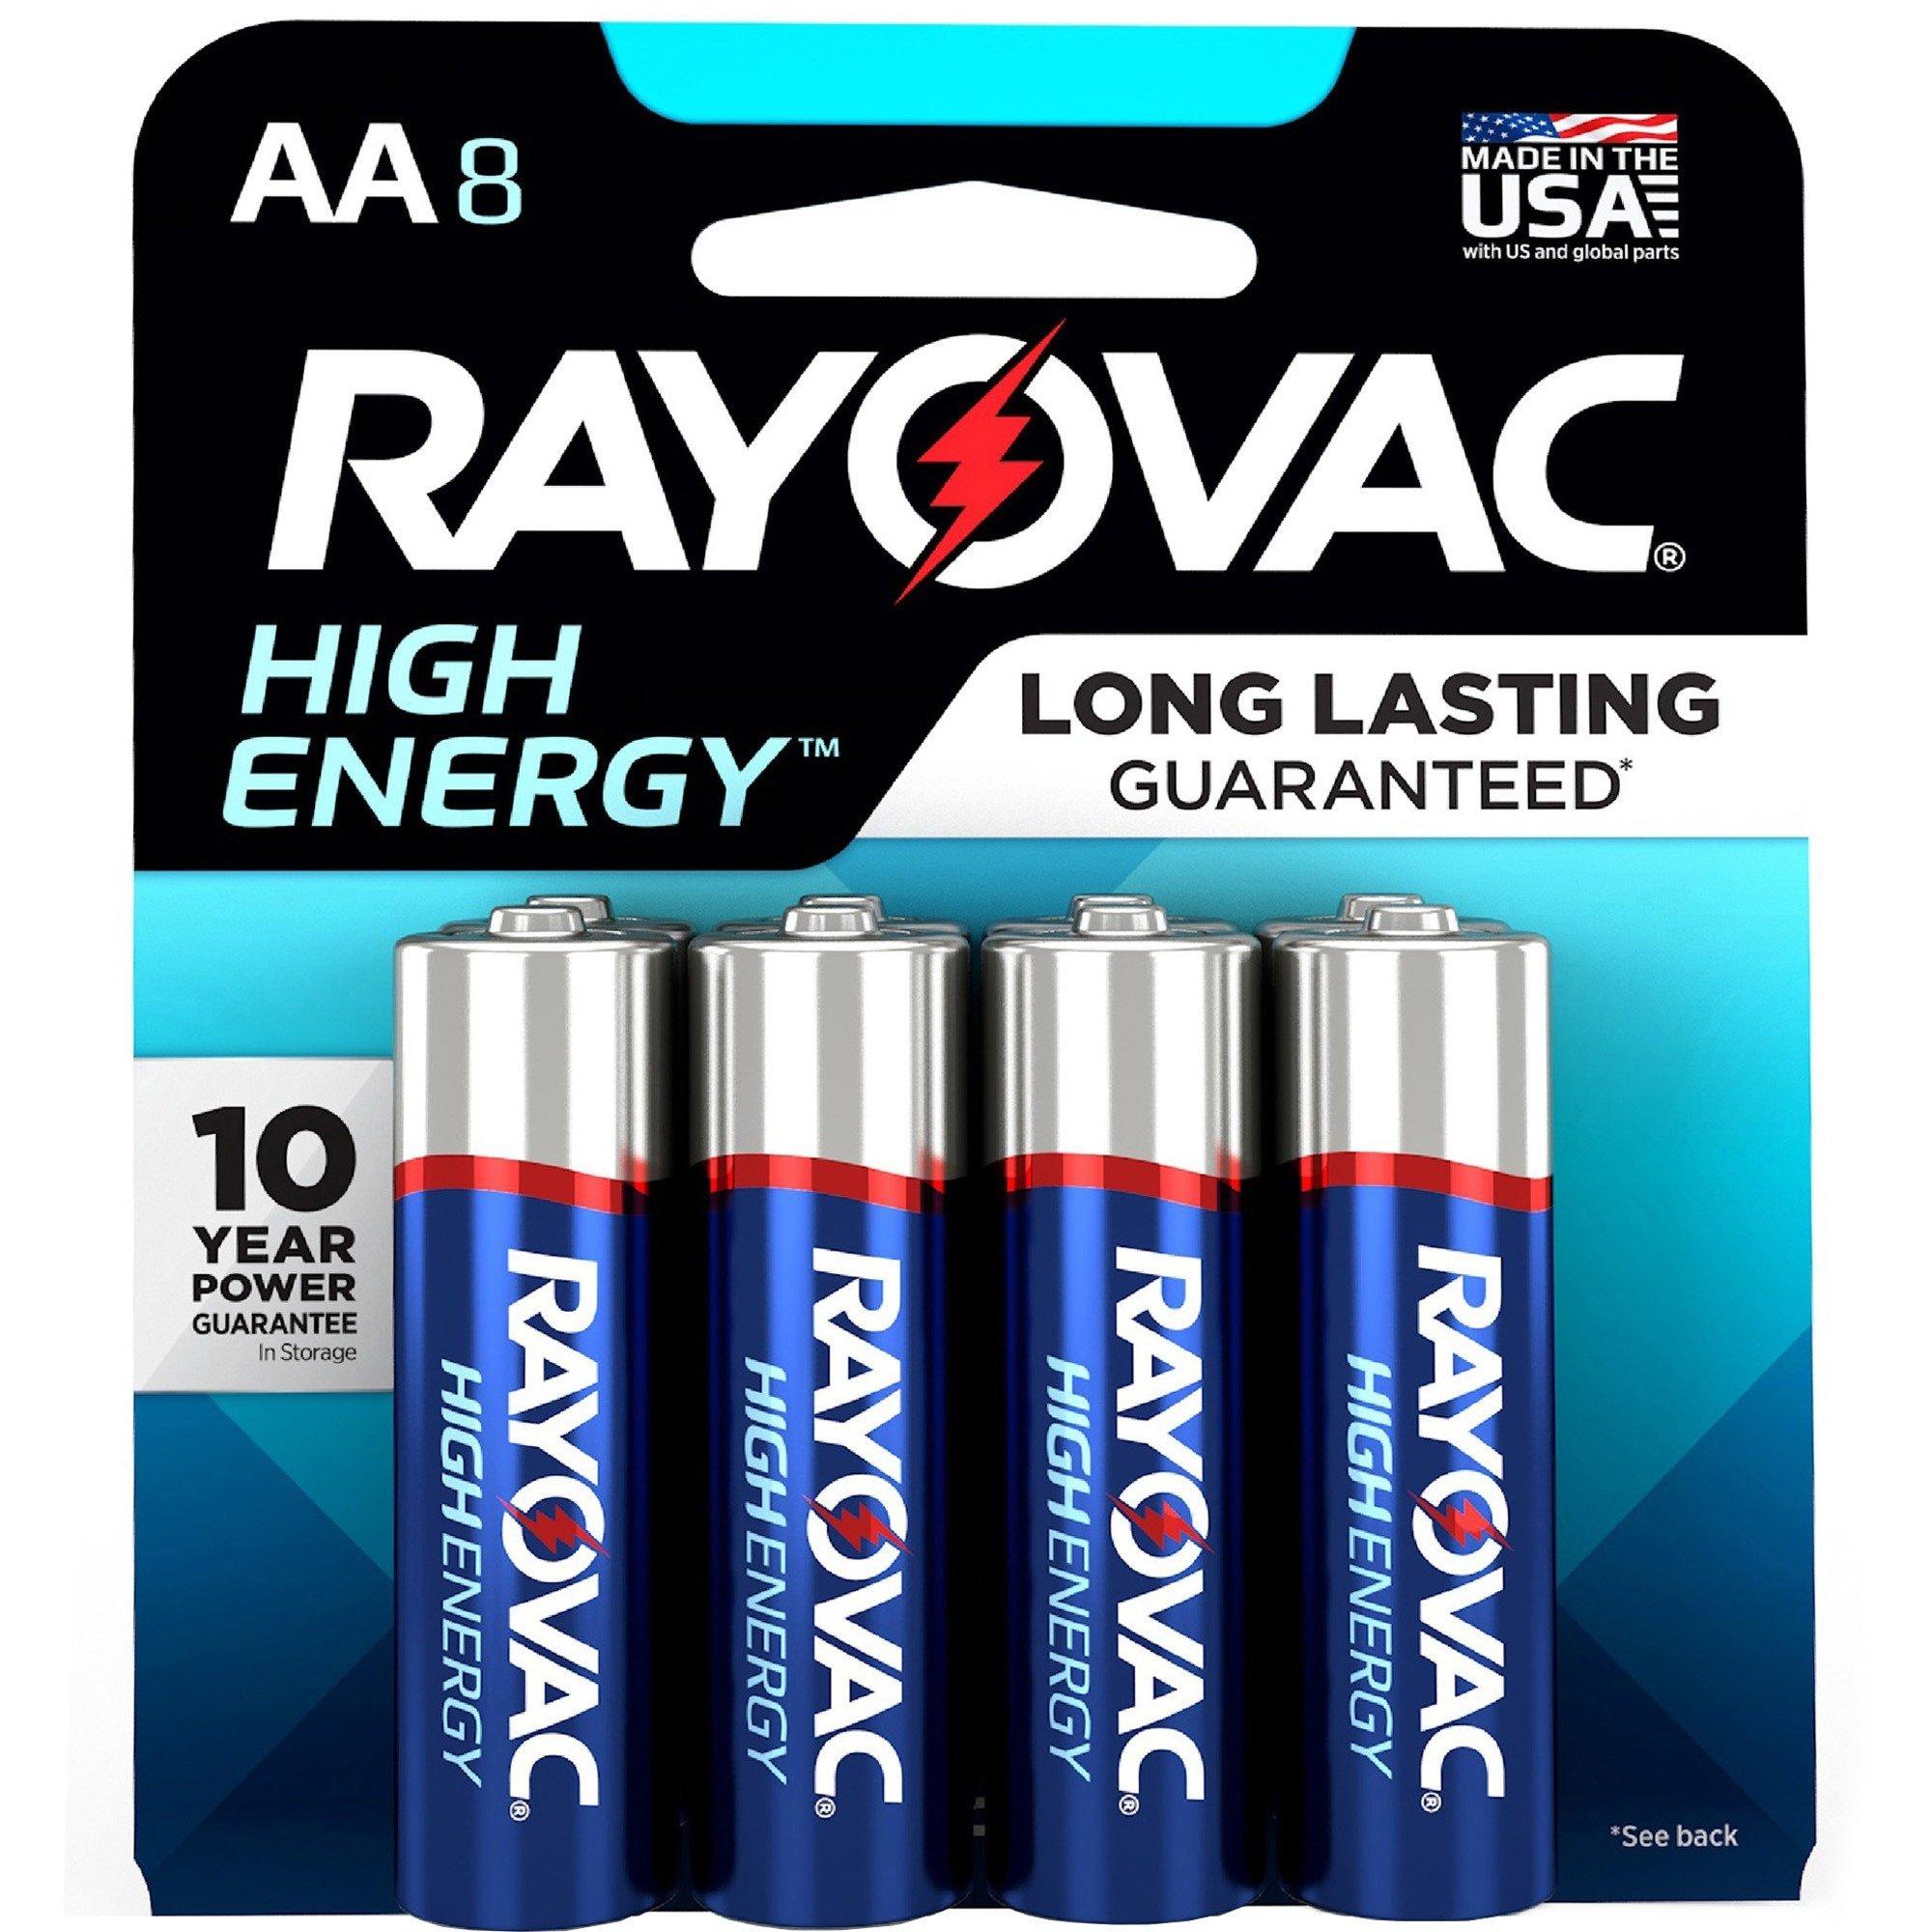 Rayovac High Energy Alkaline Batteries 8 Pack - AA